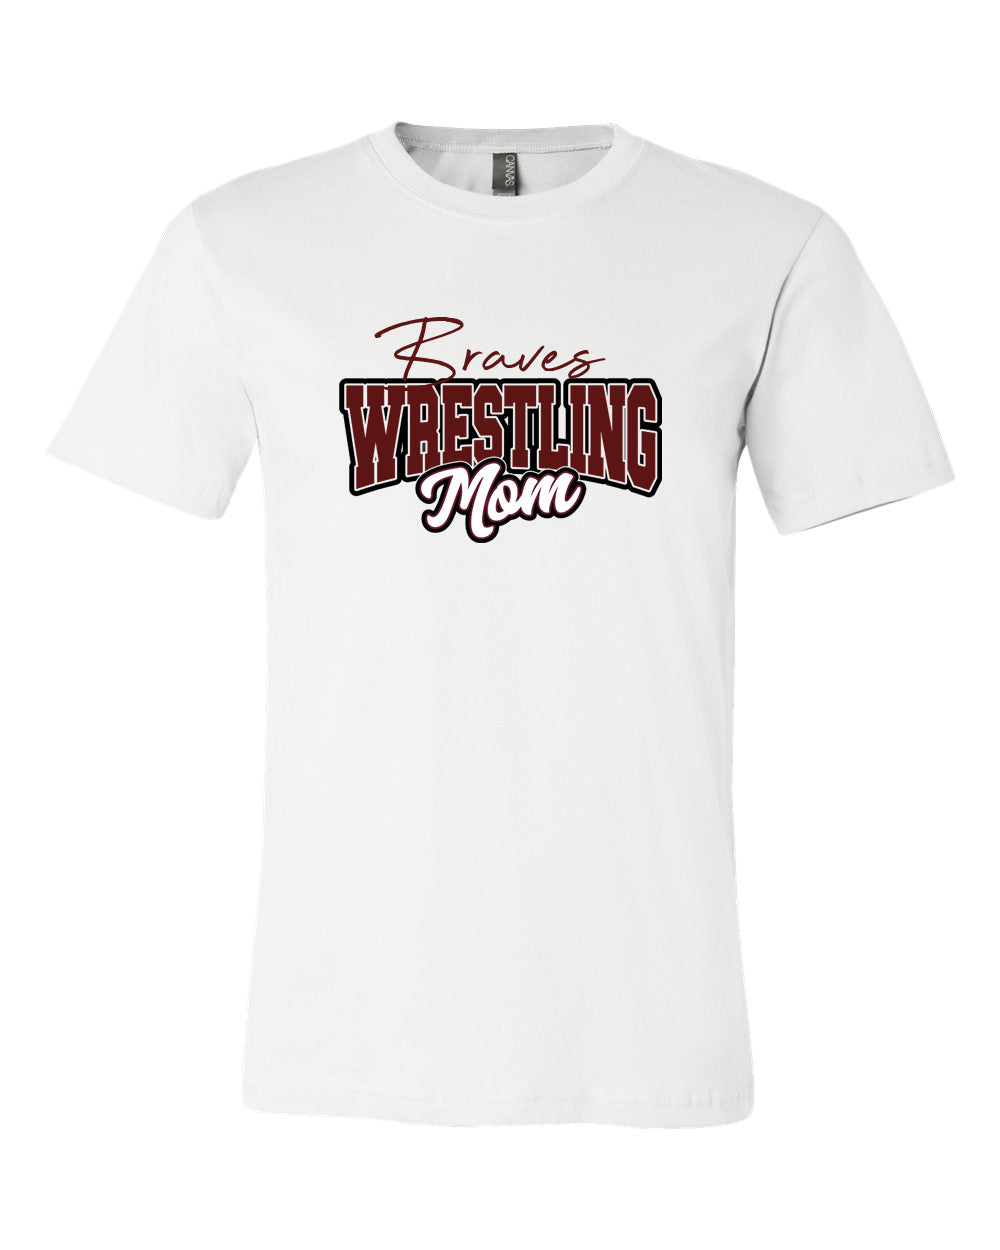 Newton wrestling design 5 T-Shirt